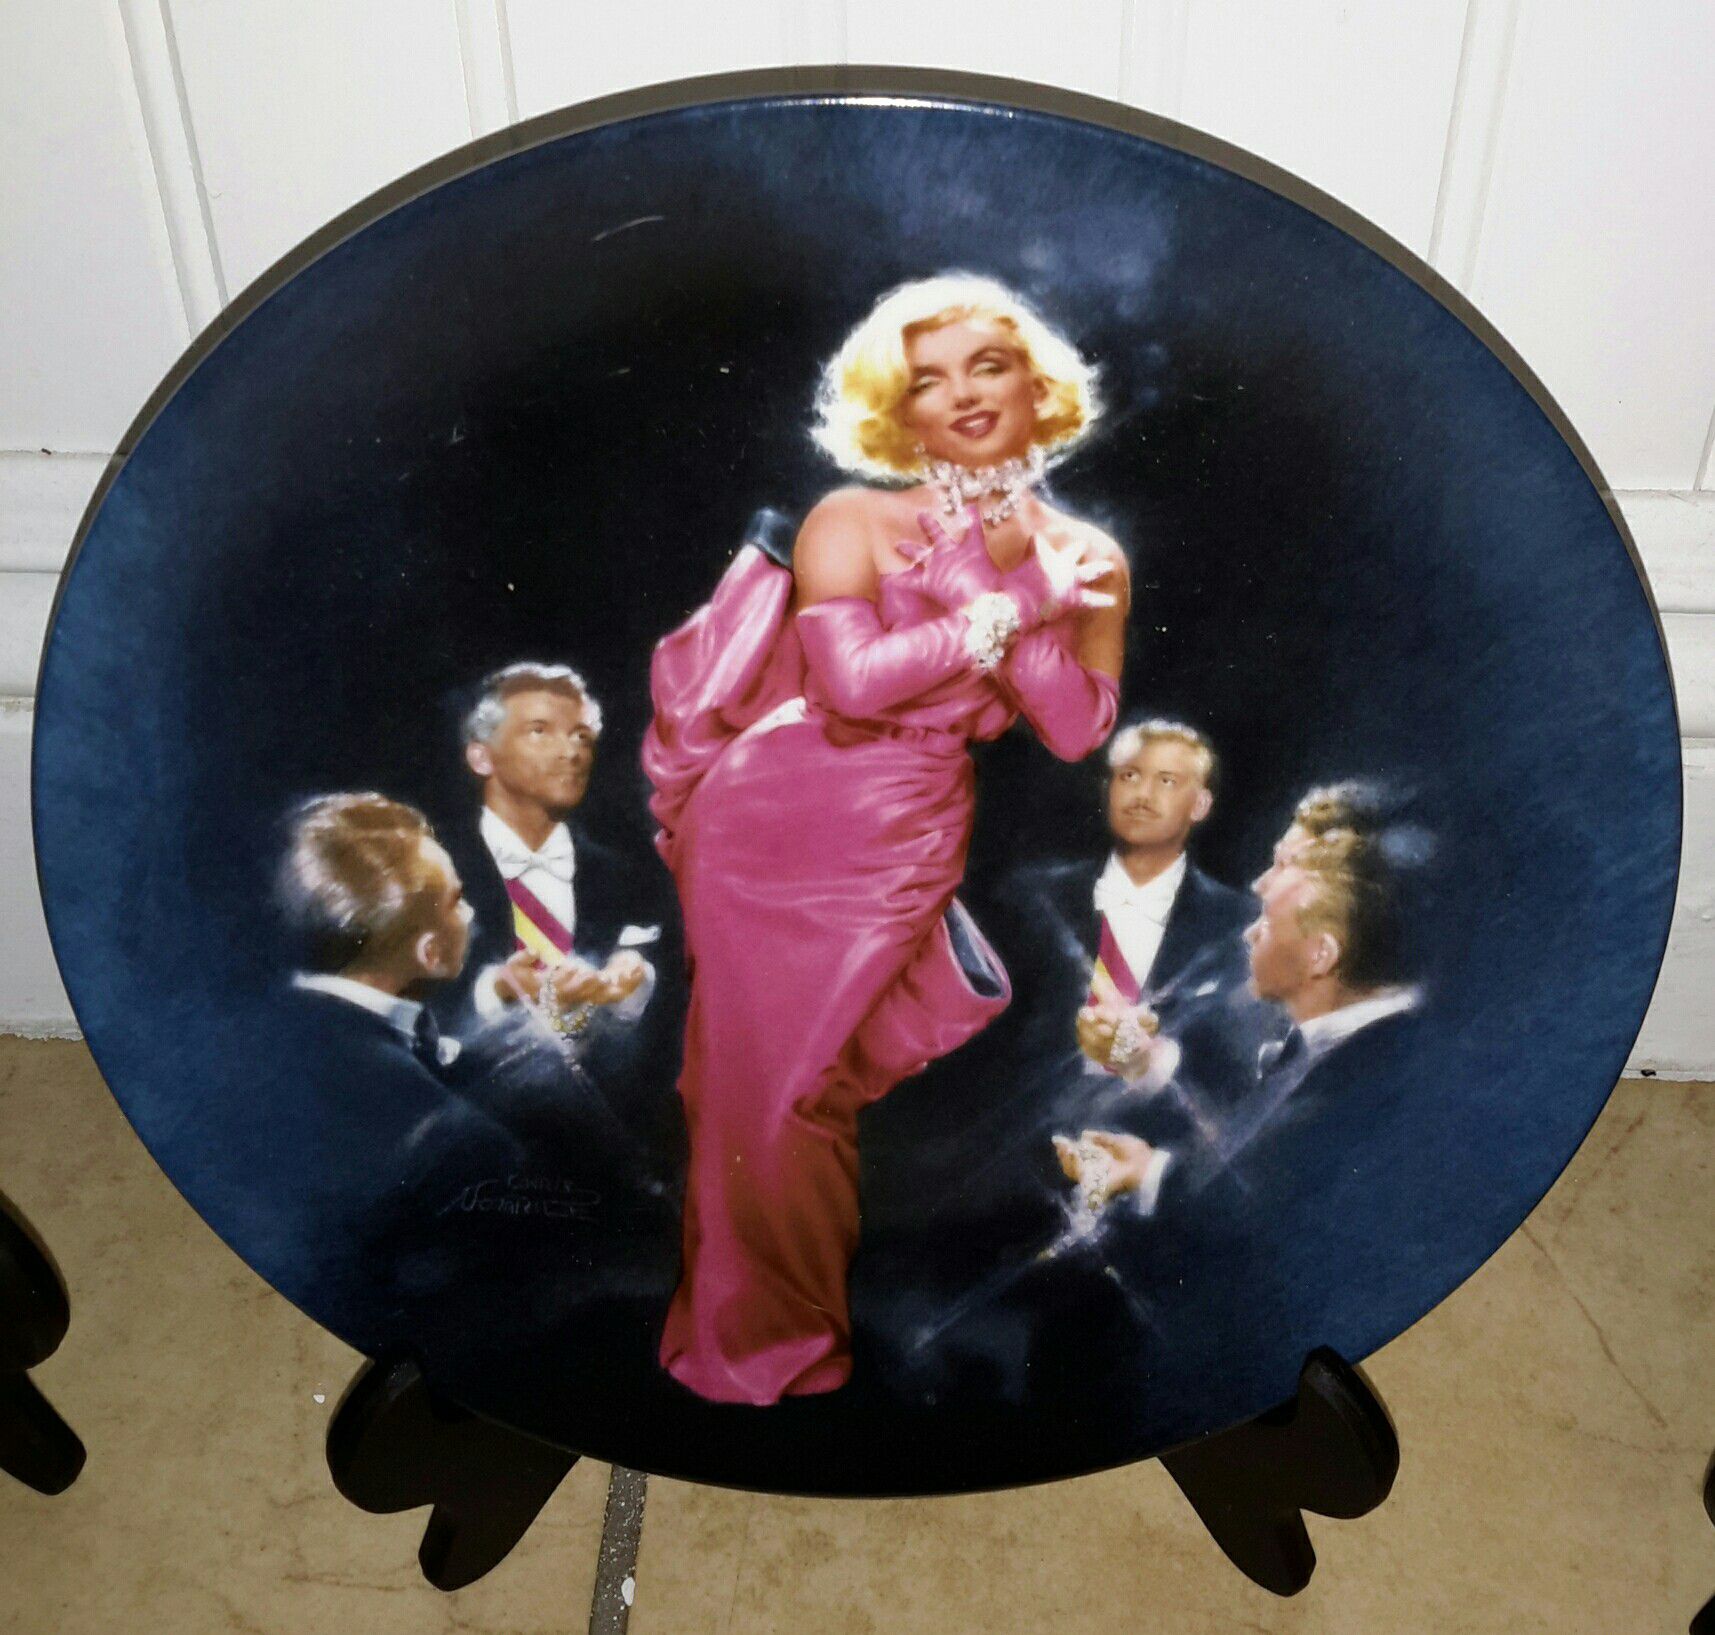 4 Marilyn Monroe plates